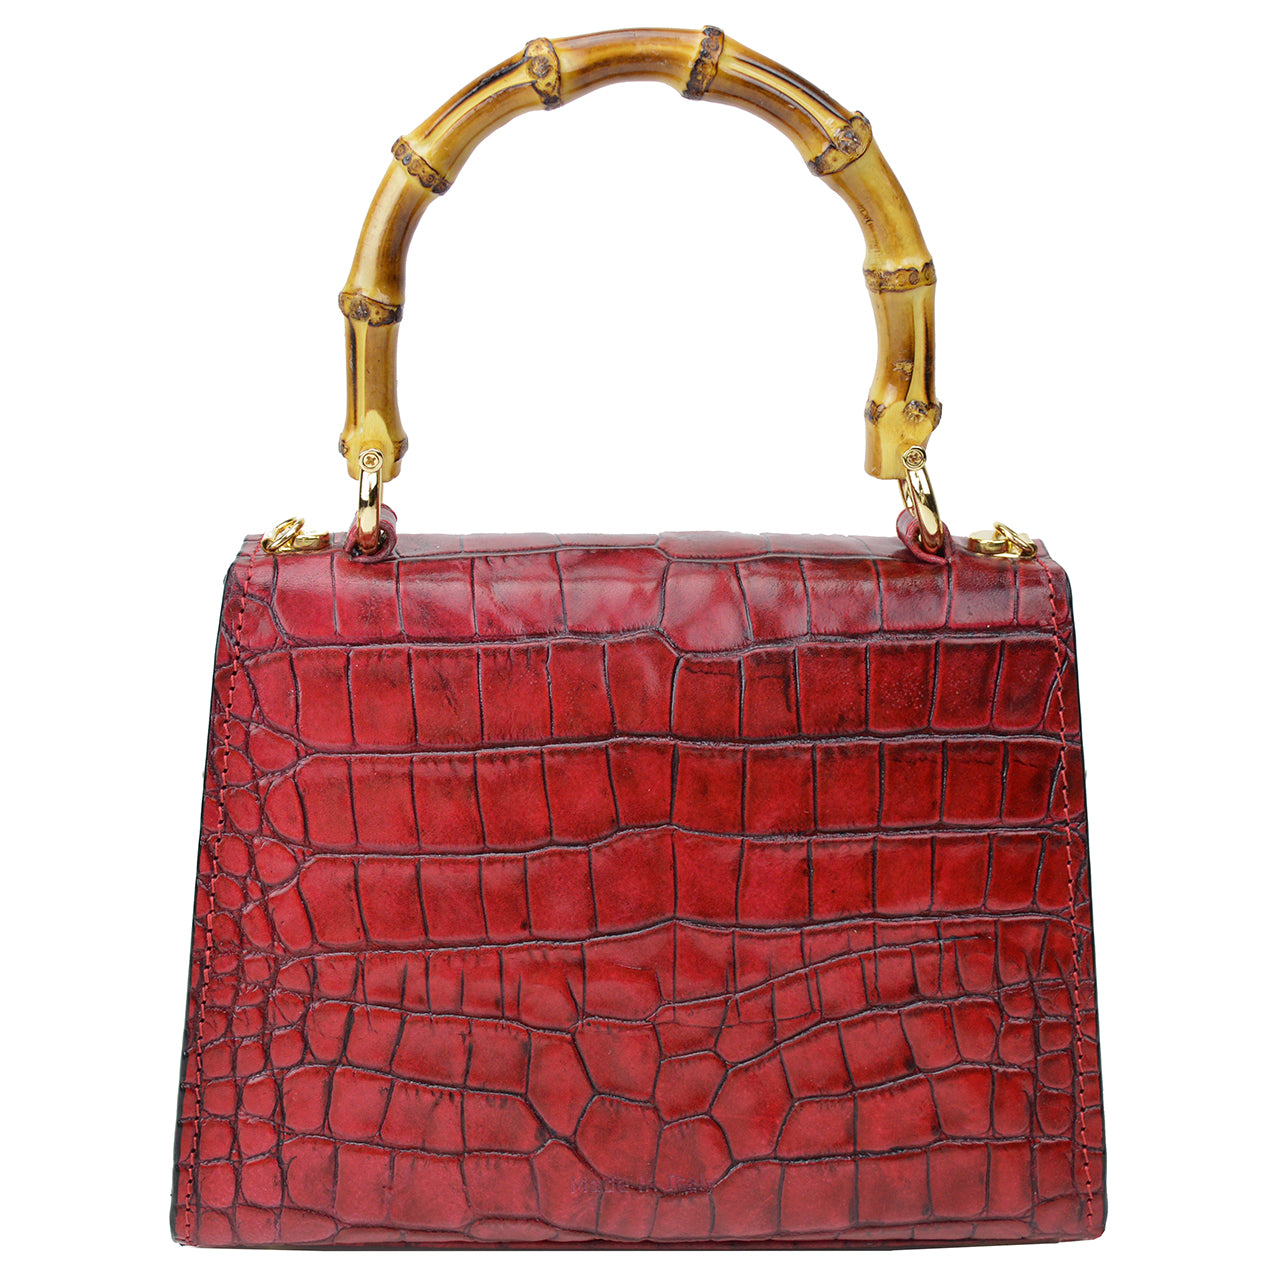 Pratesi Castalia Lady Bag in genuine Italian leather